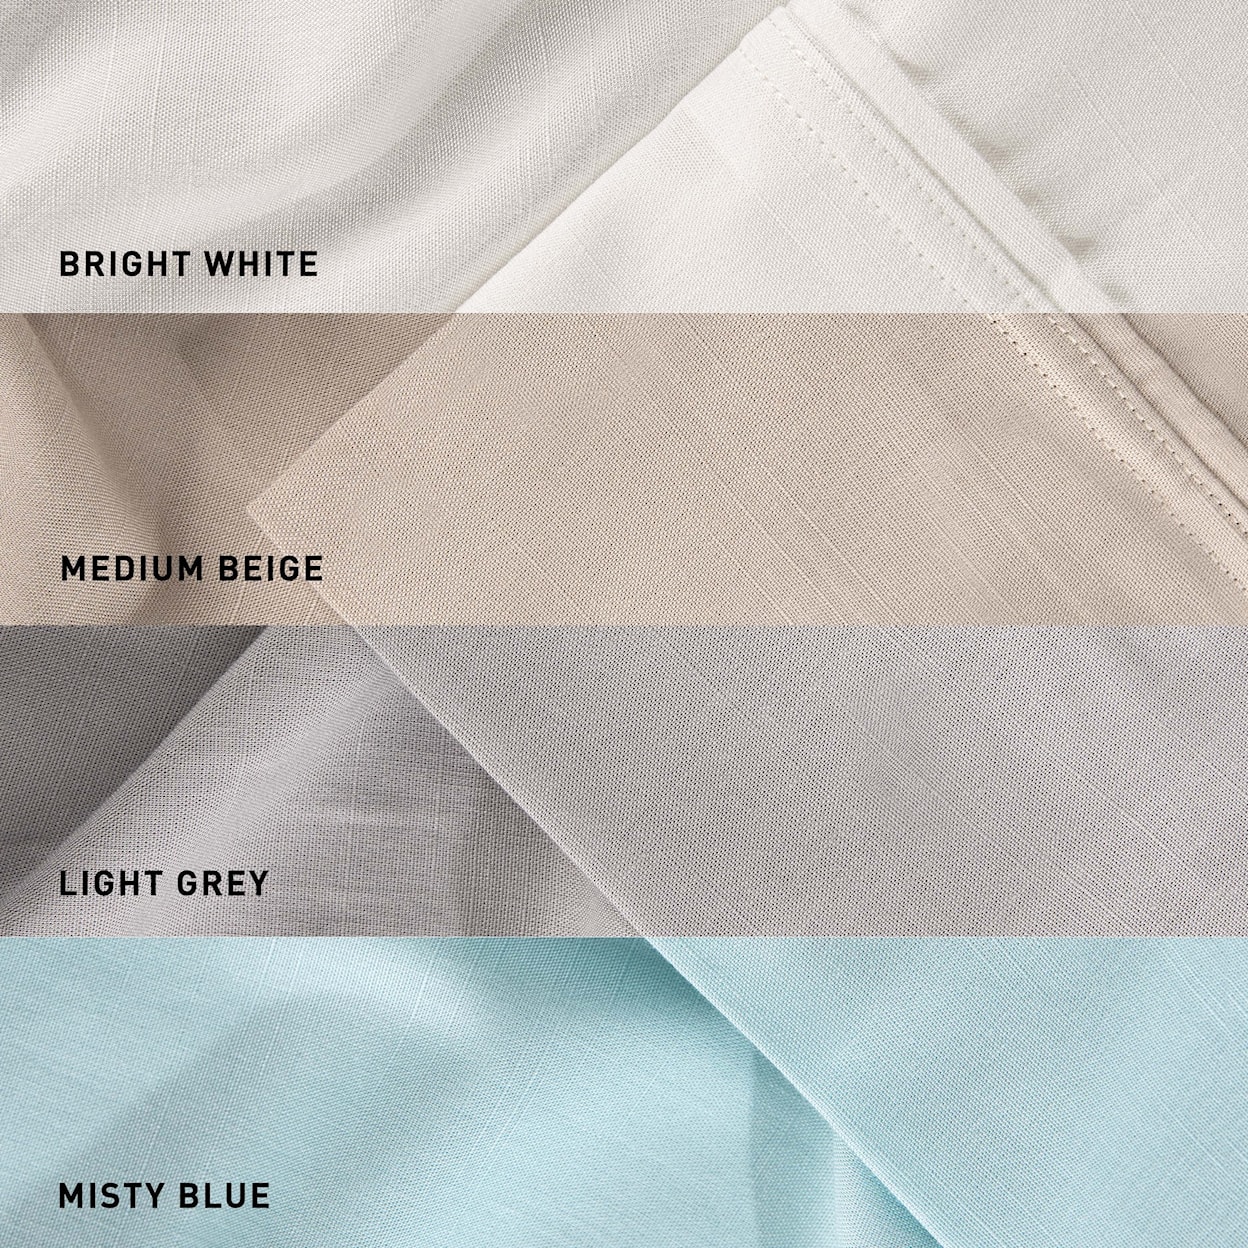 Bedgear Hyper Linen Sheets Sheet Set,White, King